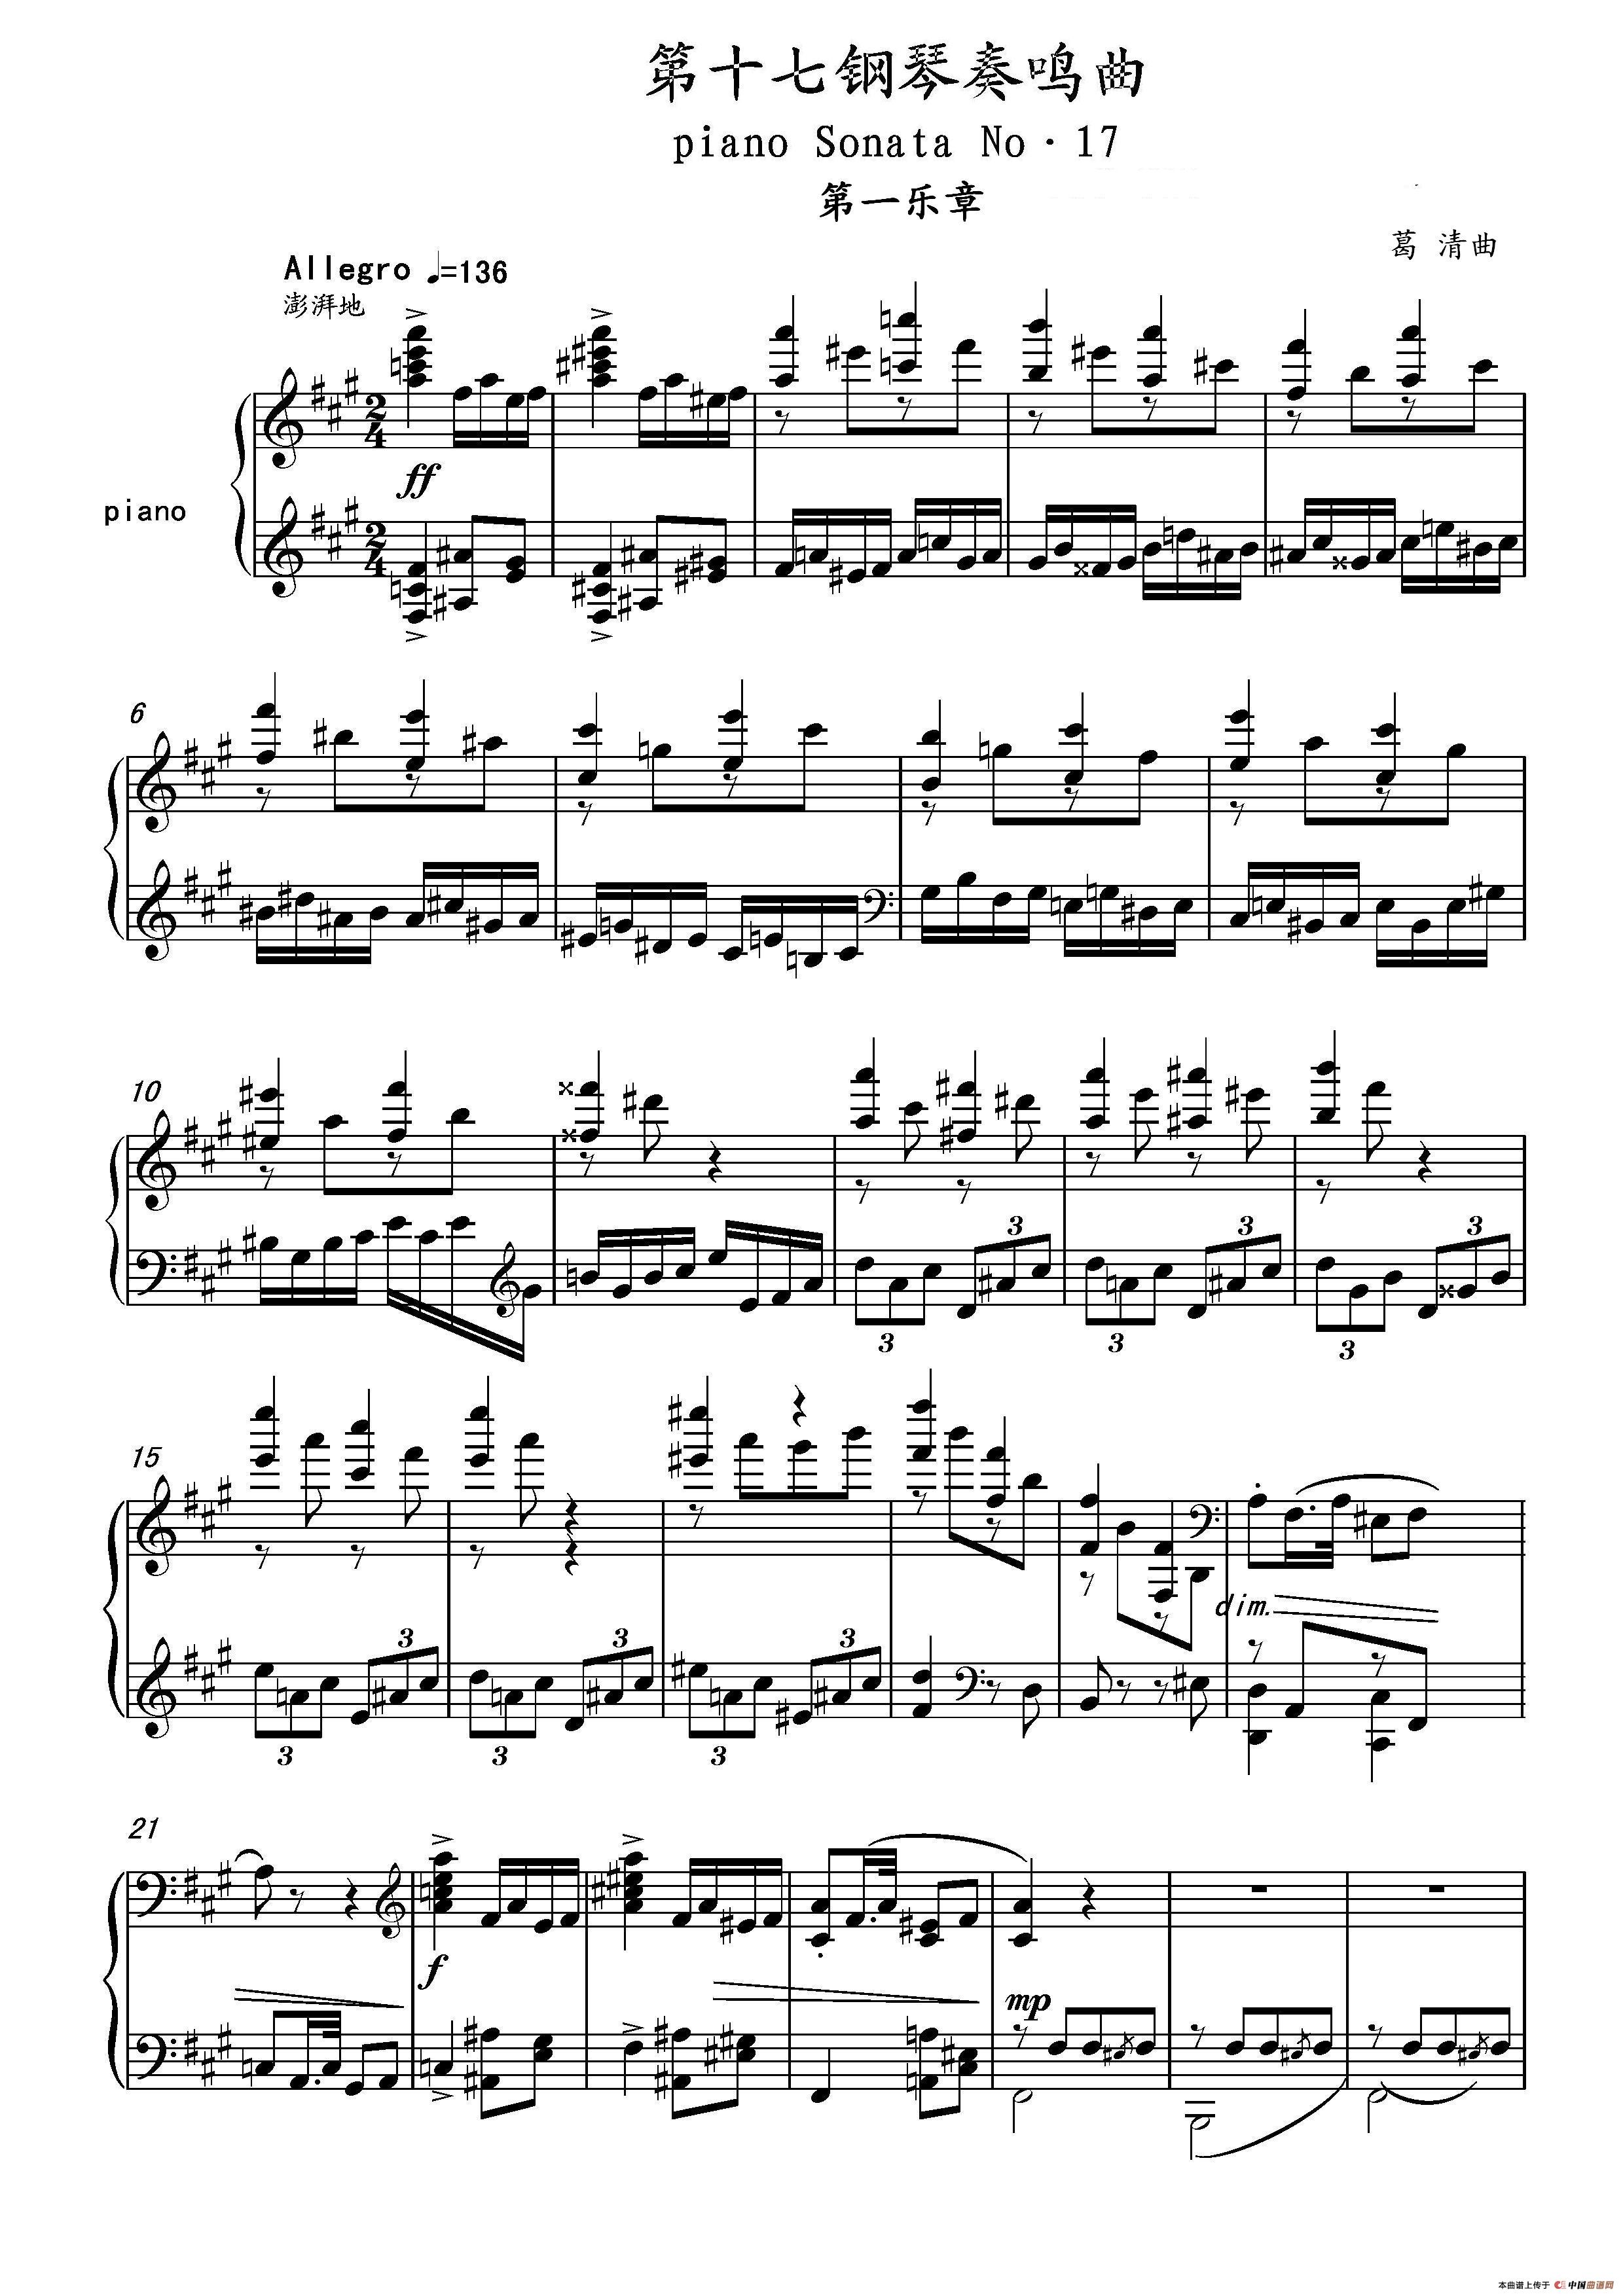 《第十七钢琴奏鸣曲Piano Sonata No.17》钢琴曲谱图分享